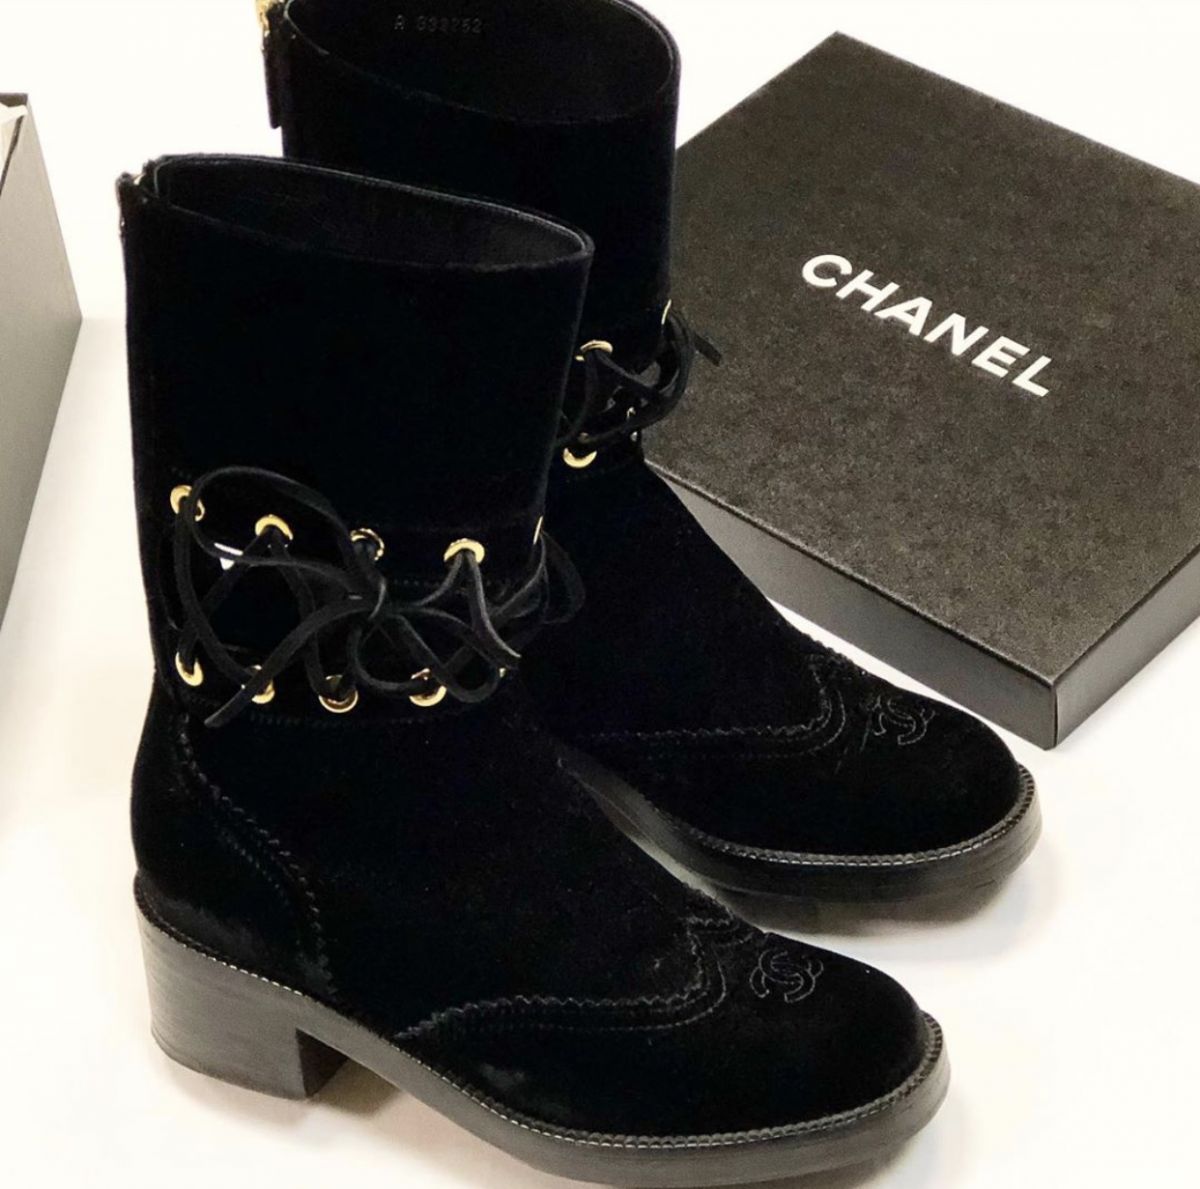 Сапоги бархатные Chanel размер 39 цена 21 540 руб